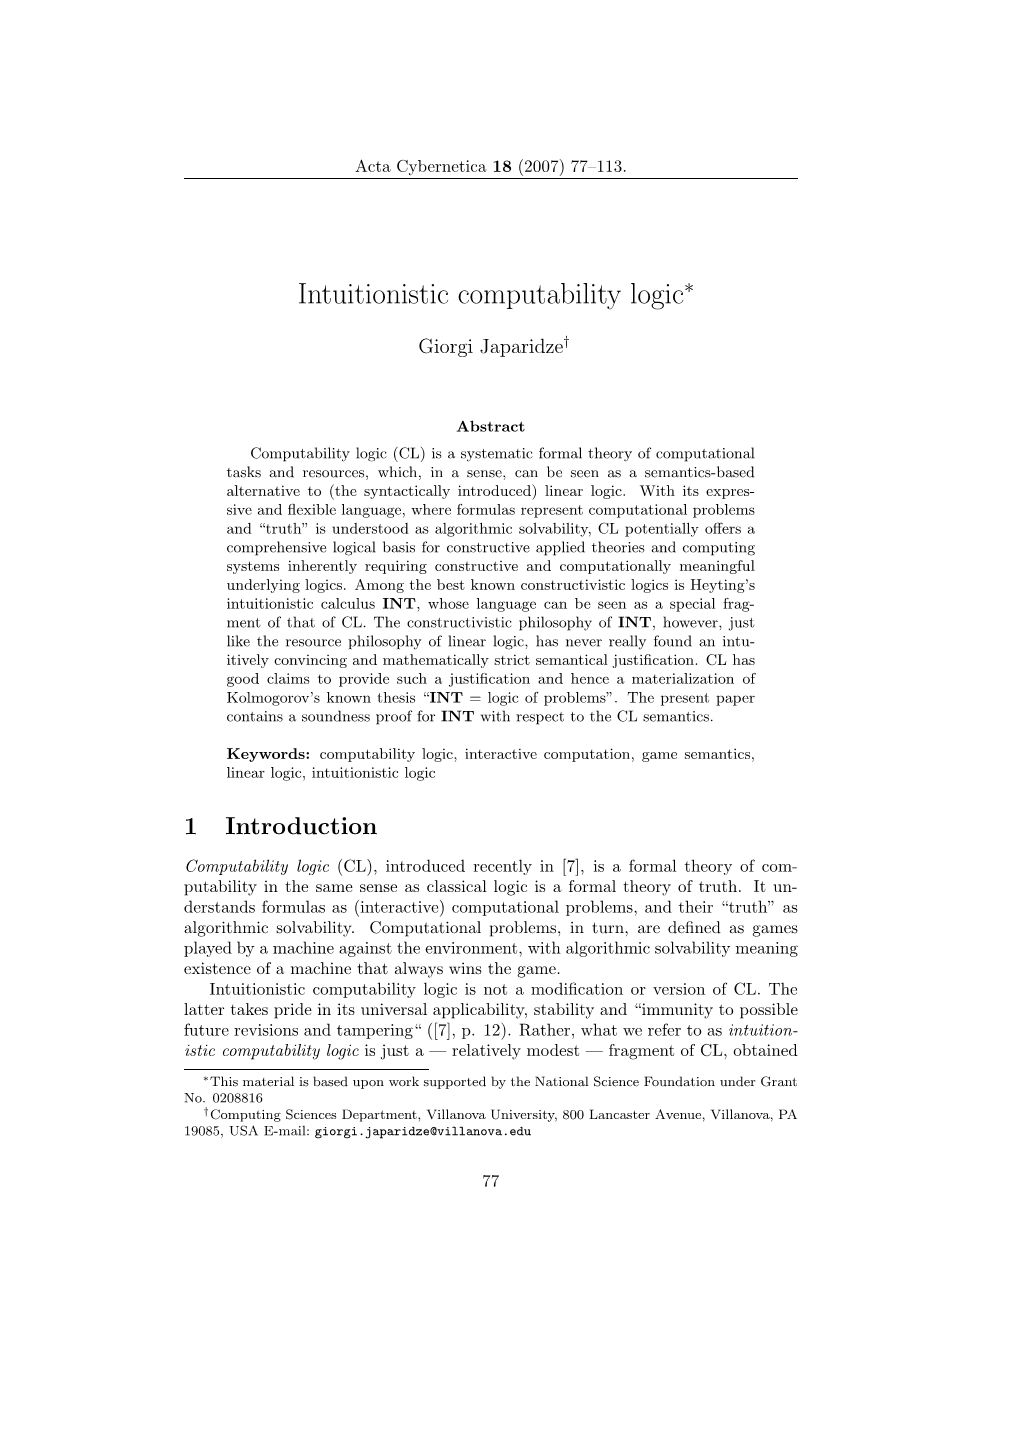 Intuitionistic Computability Logic∗